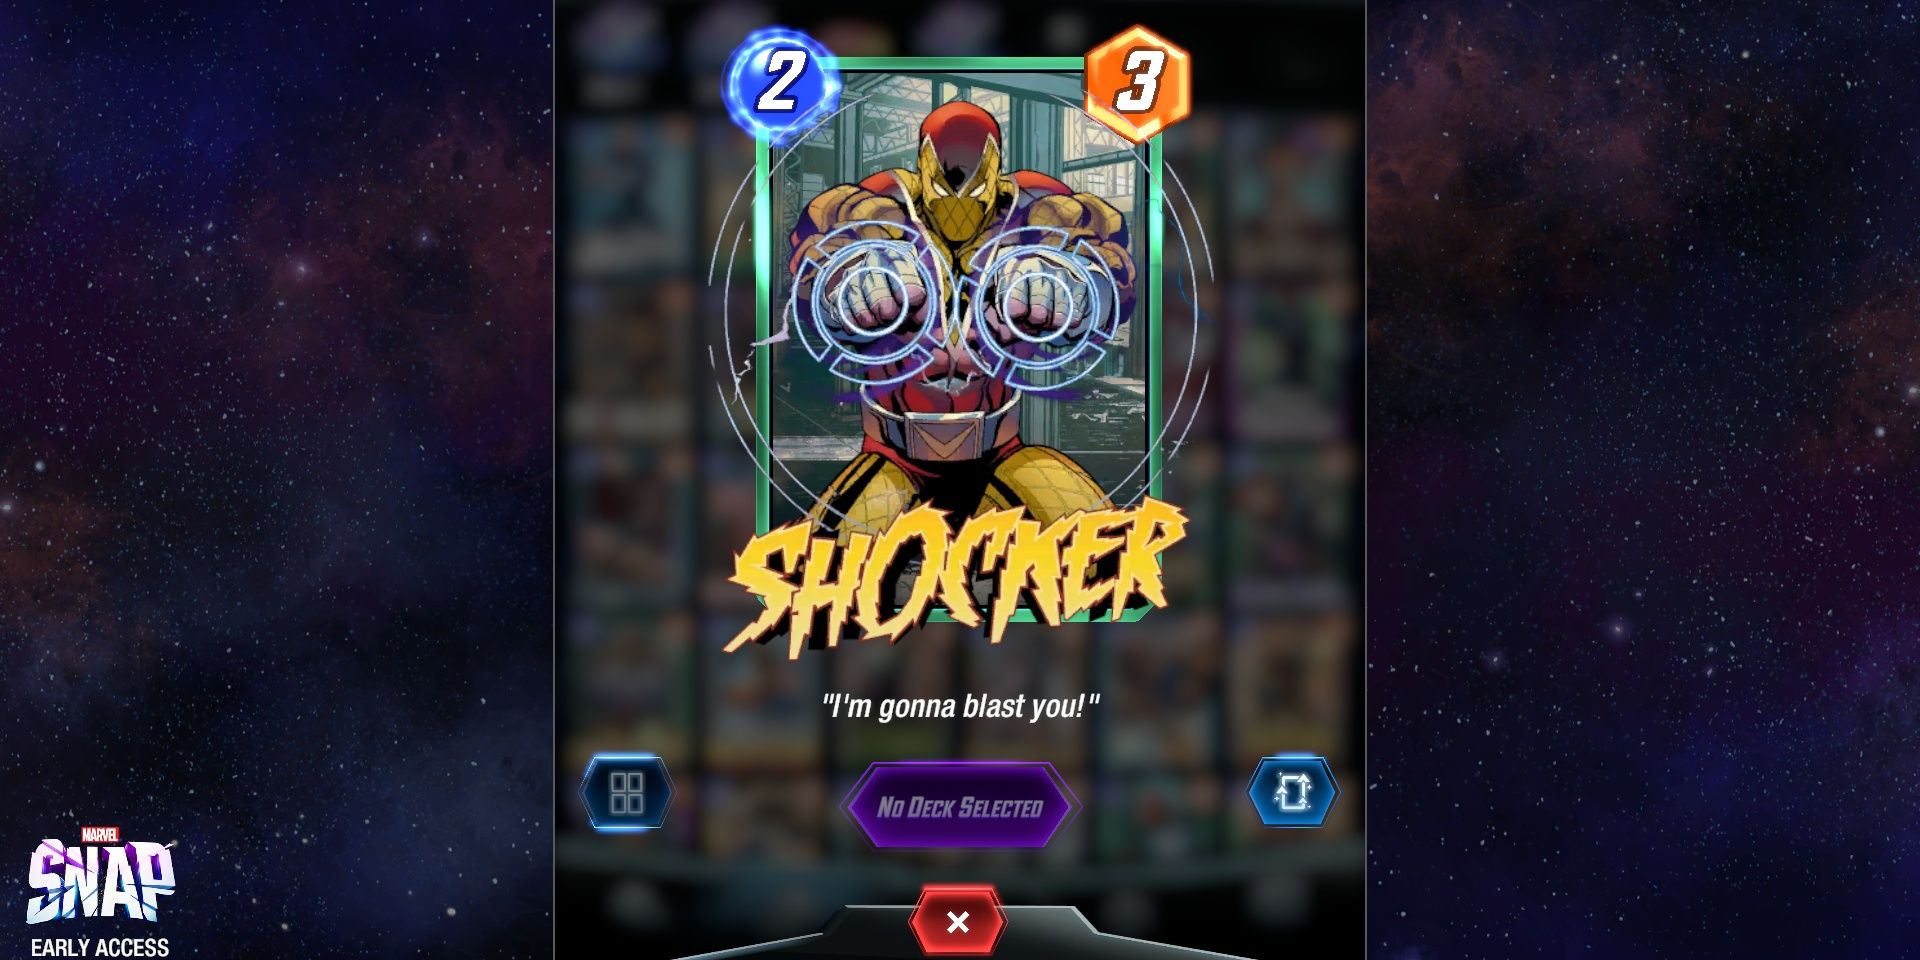 Shocker's Card in Marvel Snap.